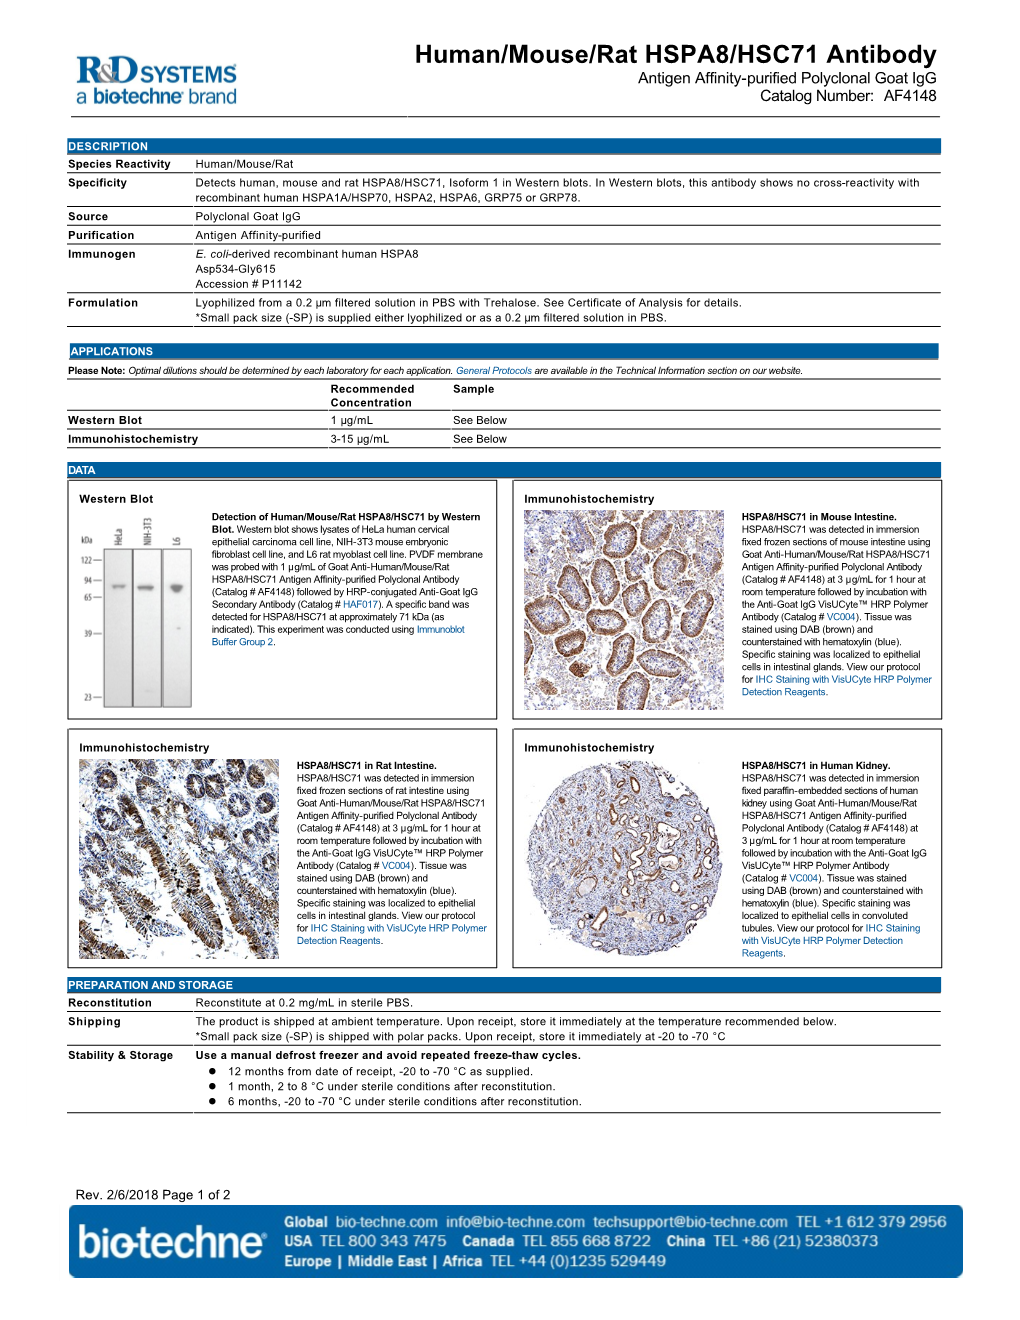 Human/Mouse/Rat HSPA8/HSC71 Antibody Antigen Affinity-Purified Polyclonal Goat Igg Catalog Number: AF4148